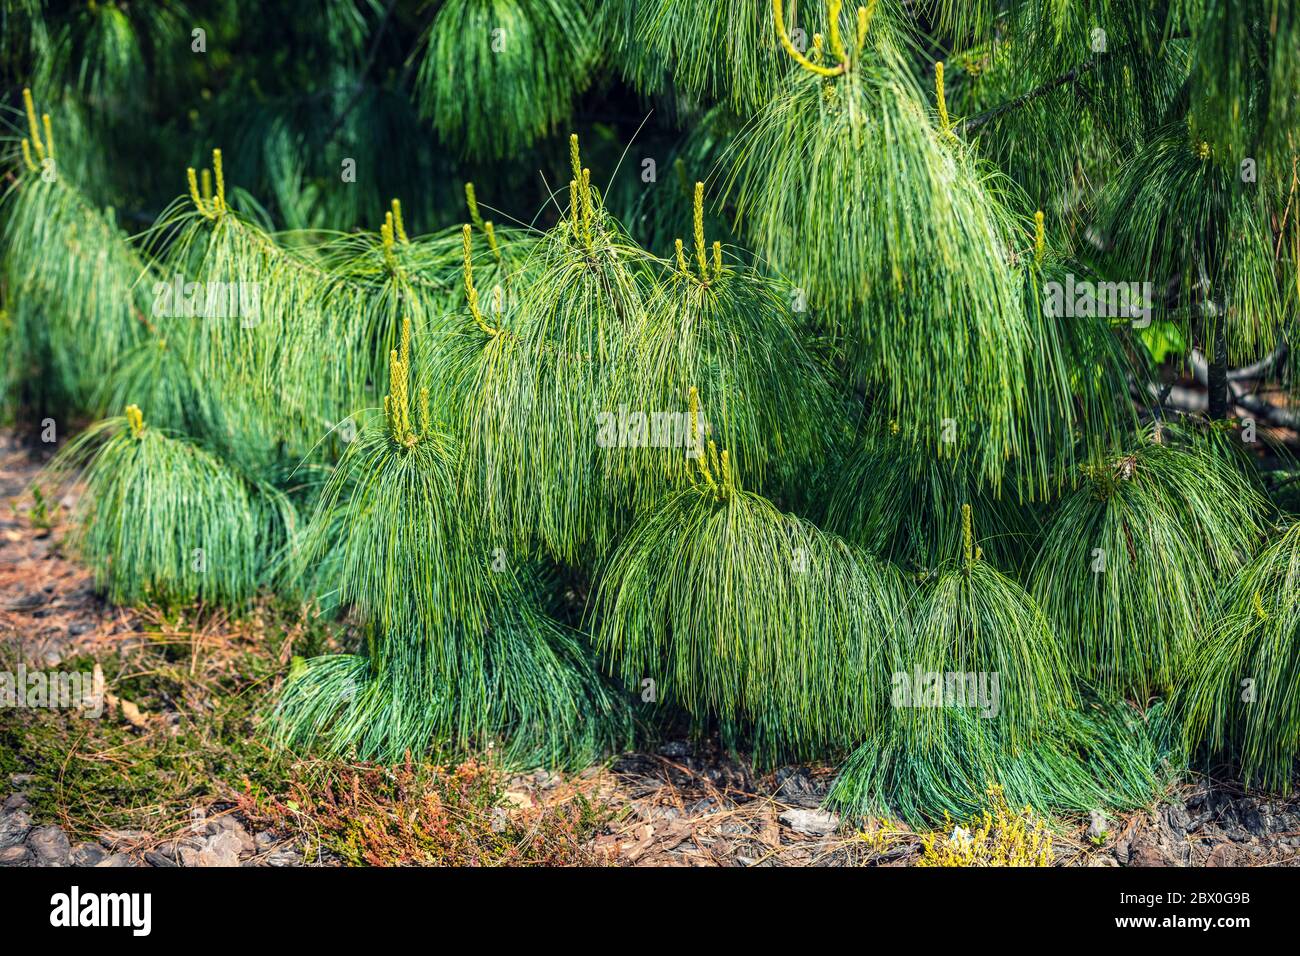 Young shoots of pine cones, the foliage of pine tree Bhutan pine (Himalayan pine, Pinus wallichiana) Stock Photo